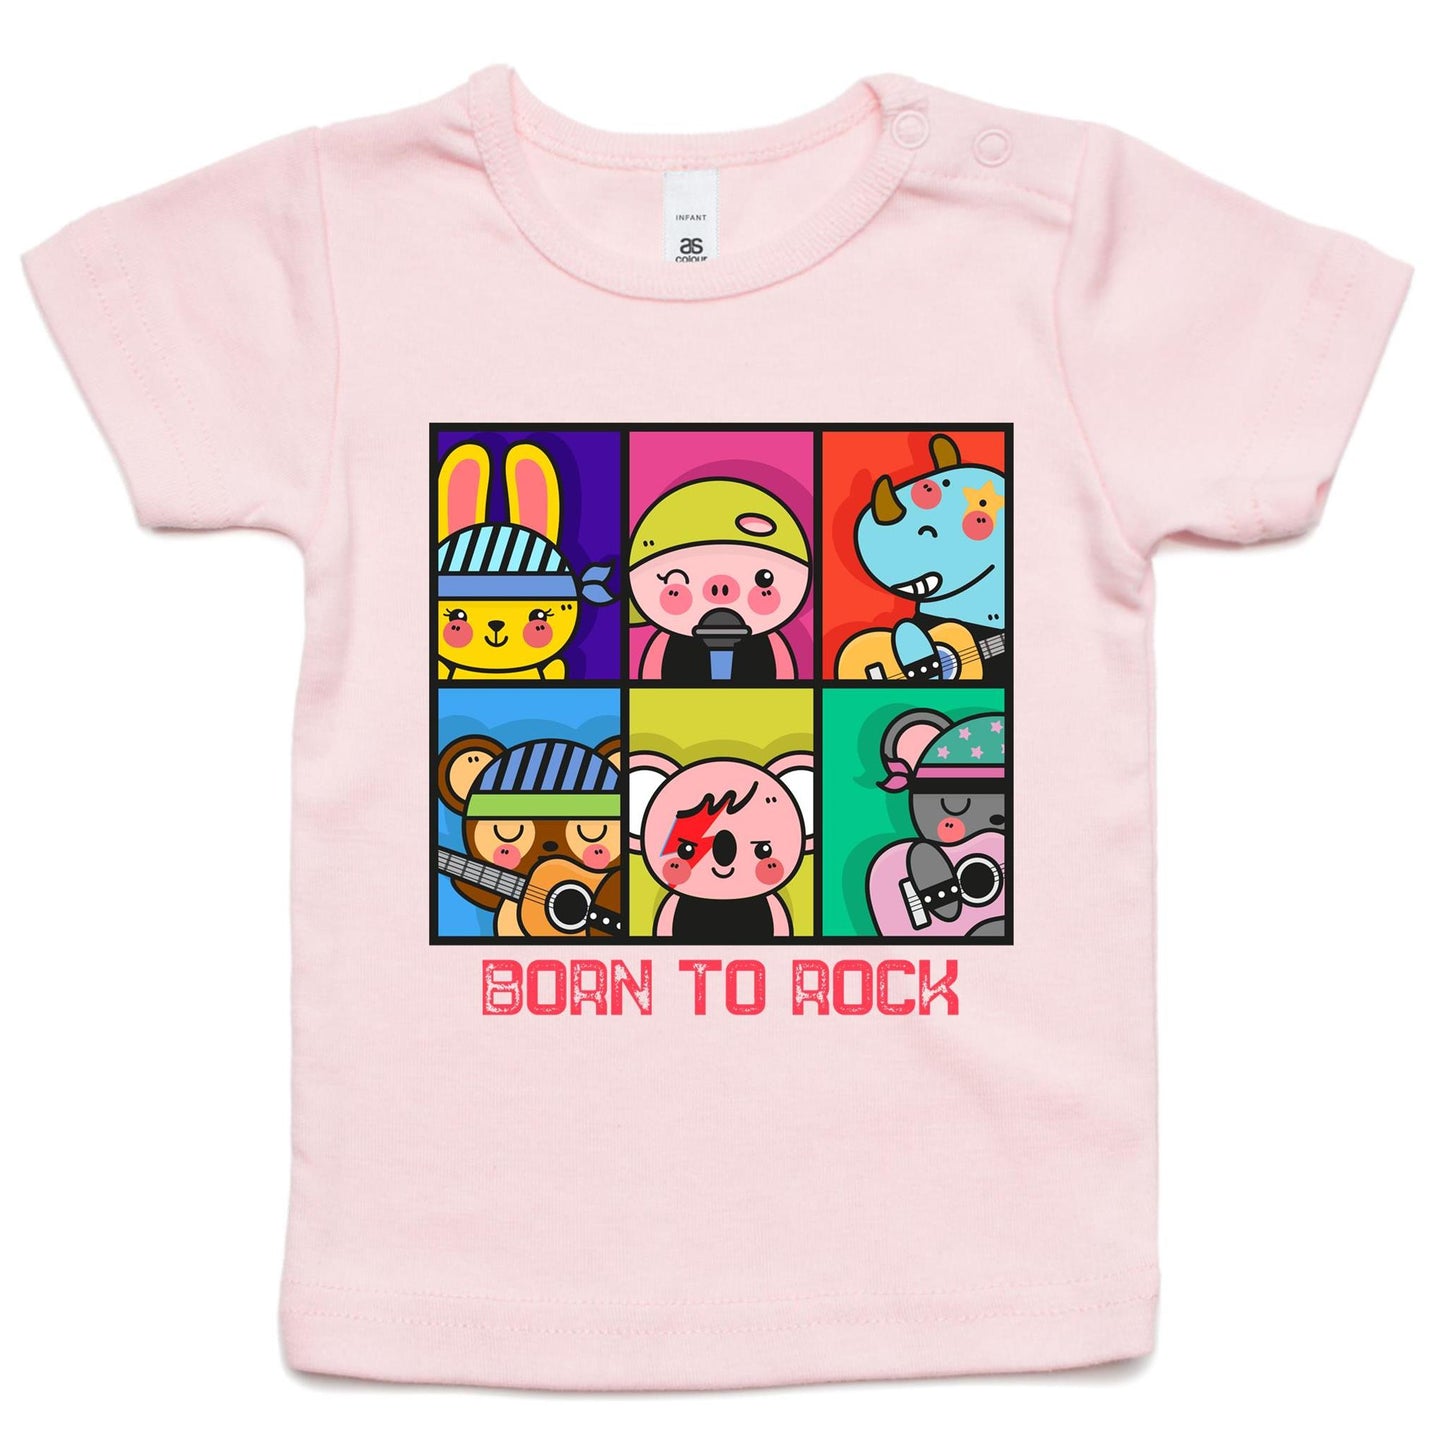 Born To Rock - Baby T-shirt Pink Baby T-shirt Music